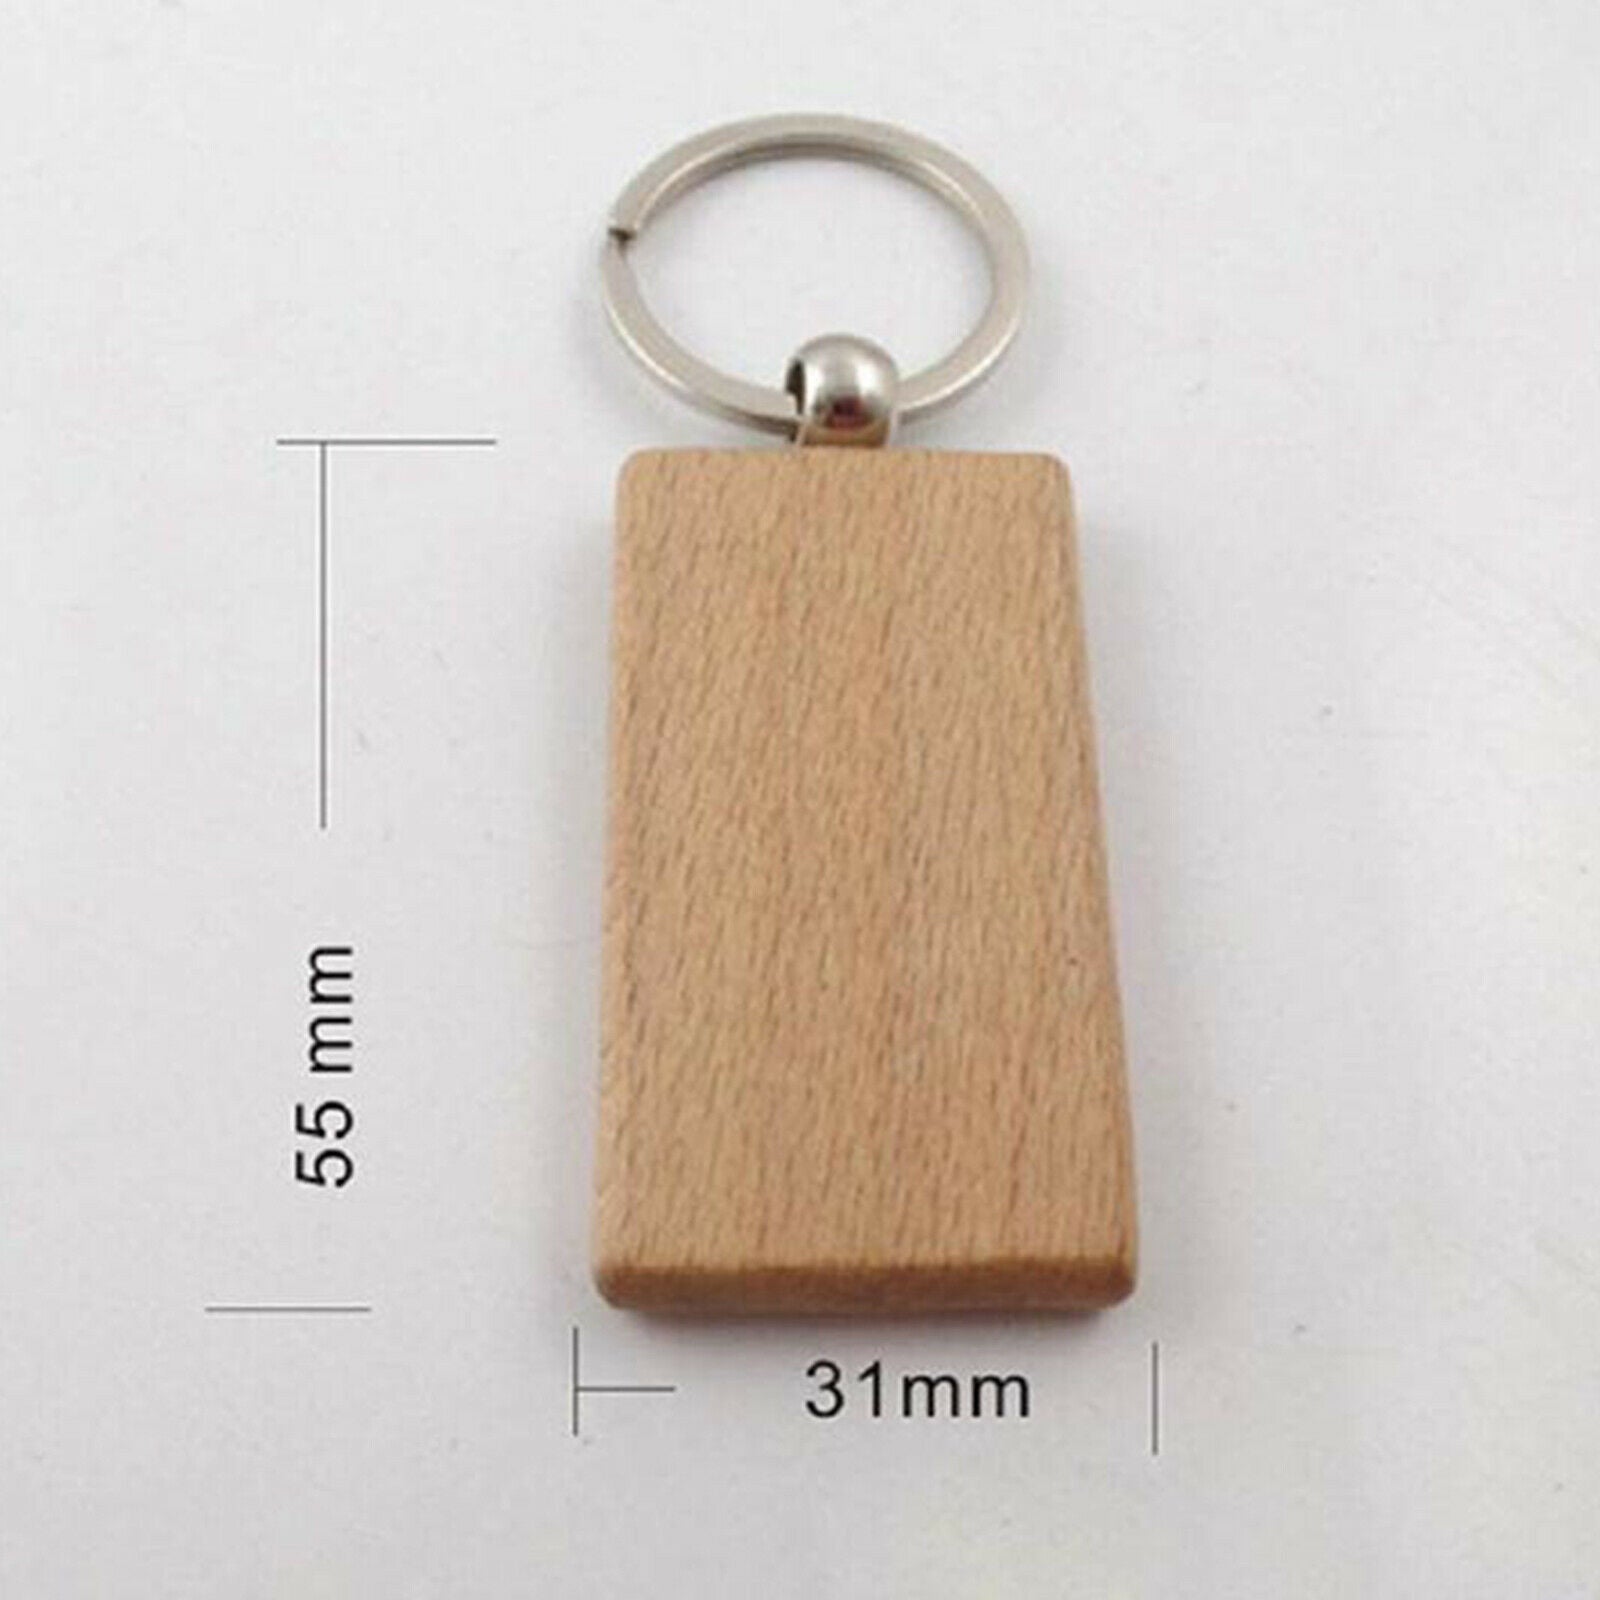 25Pcs Unpainted Blank Wooden Key Chain Mixed Keychain Keyfob Car Pendant DIY